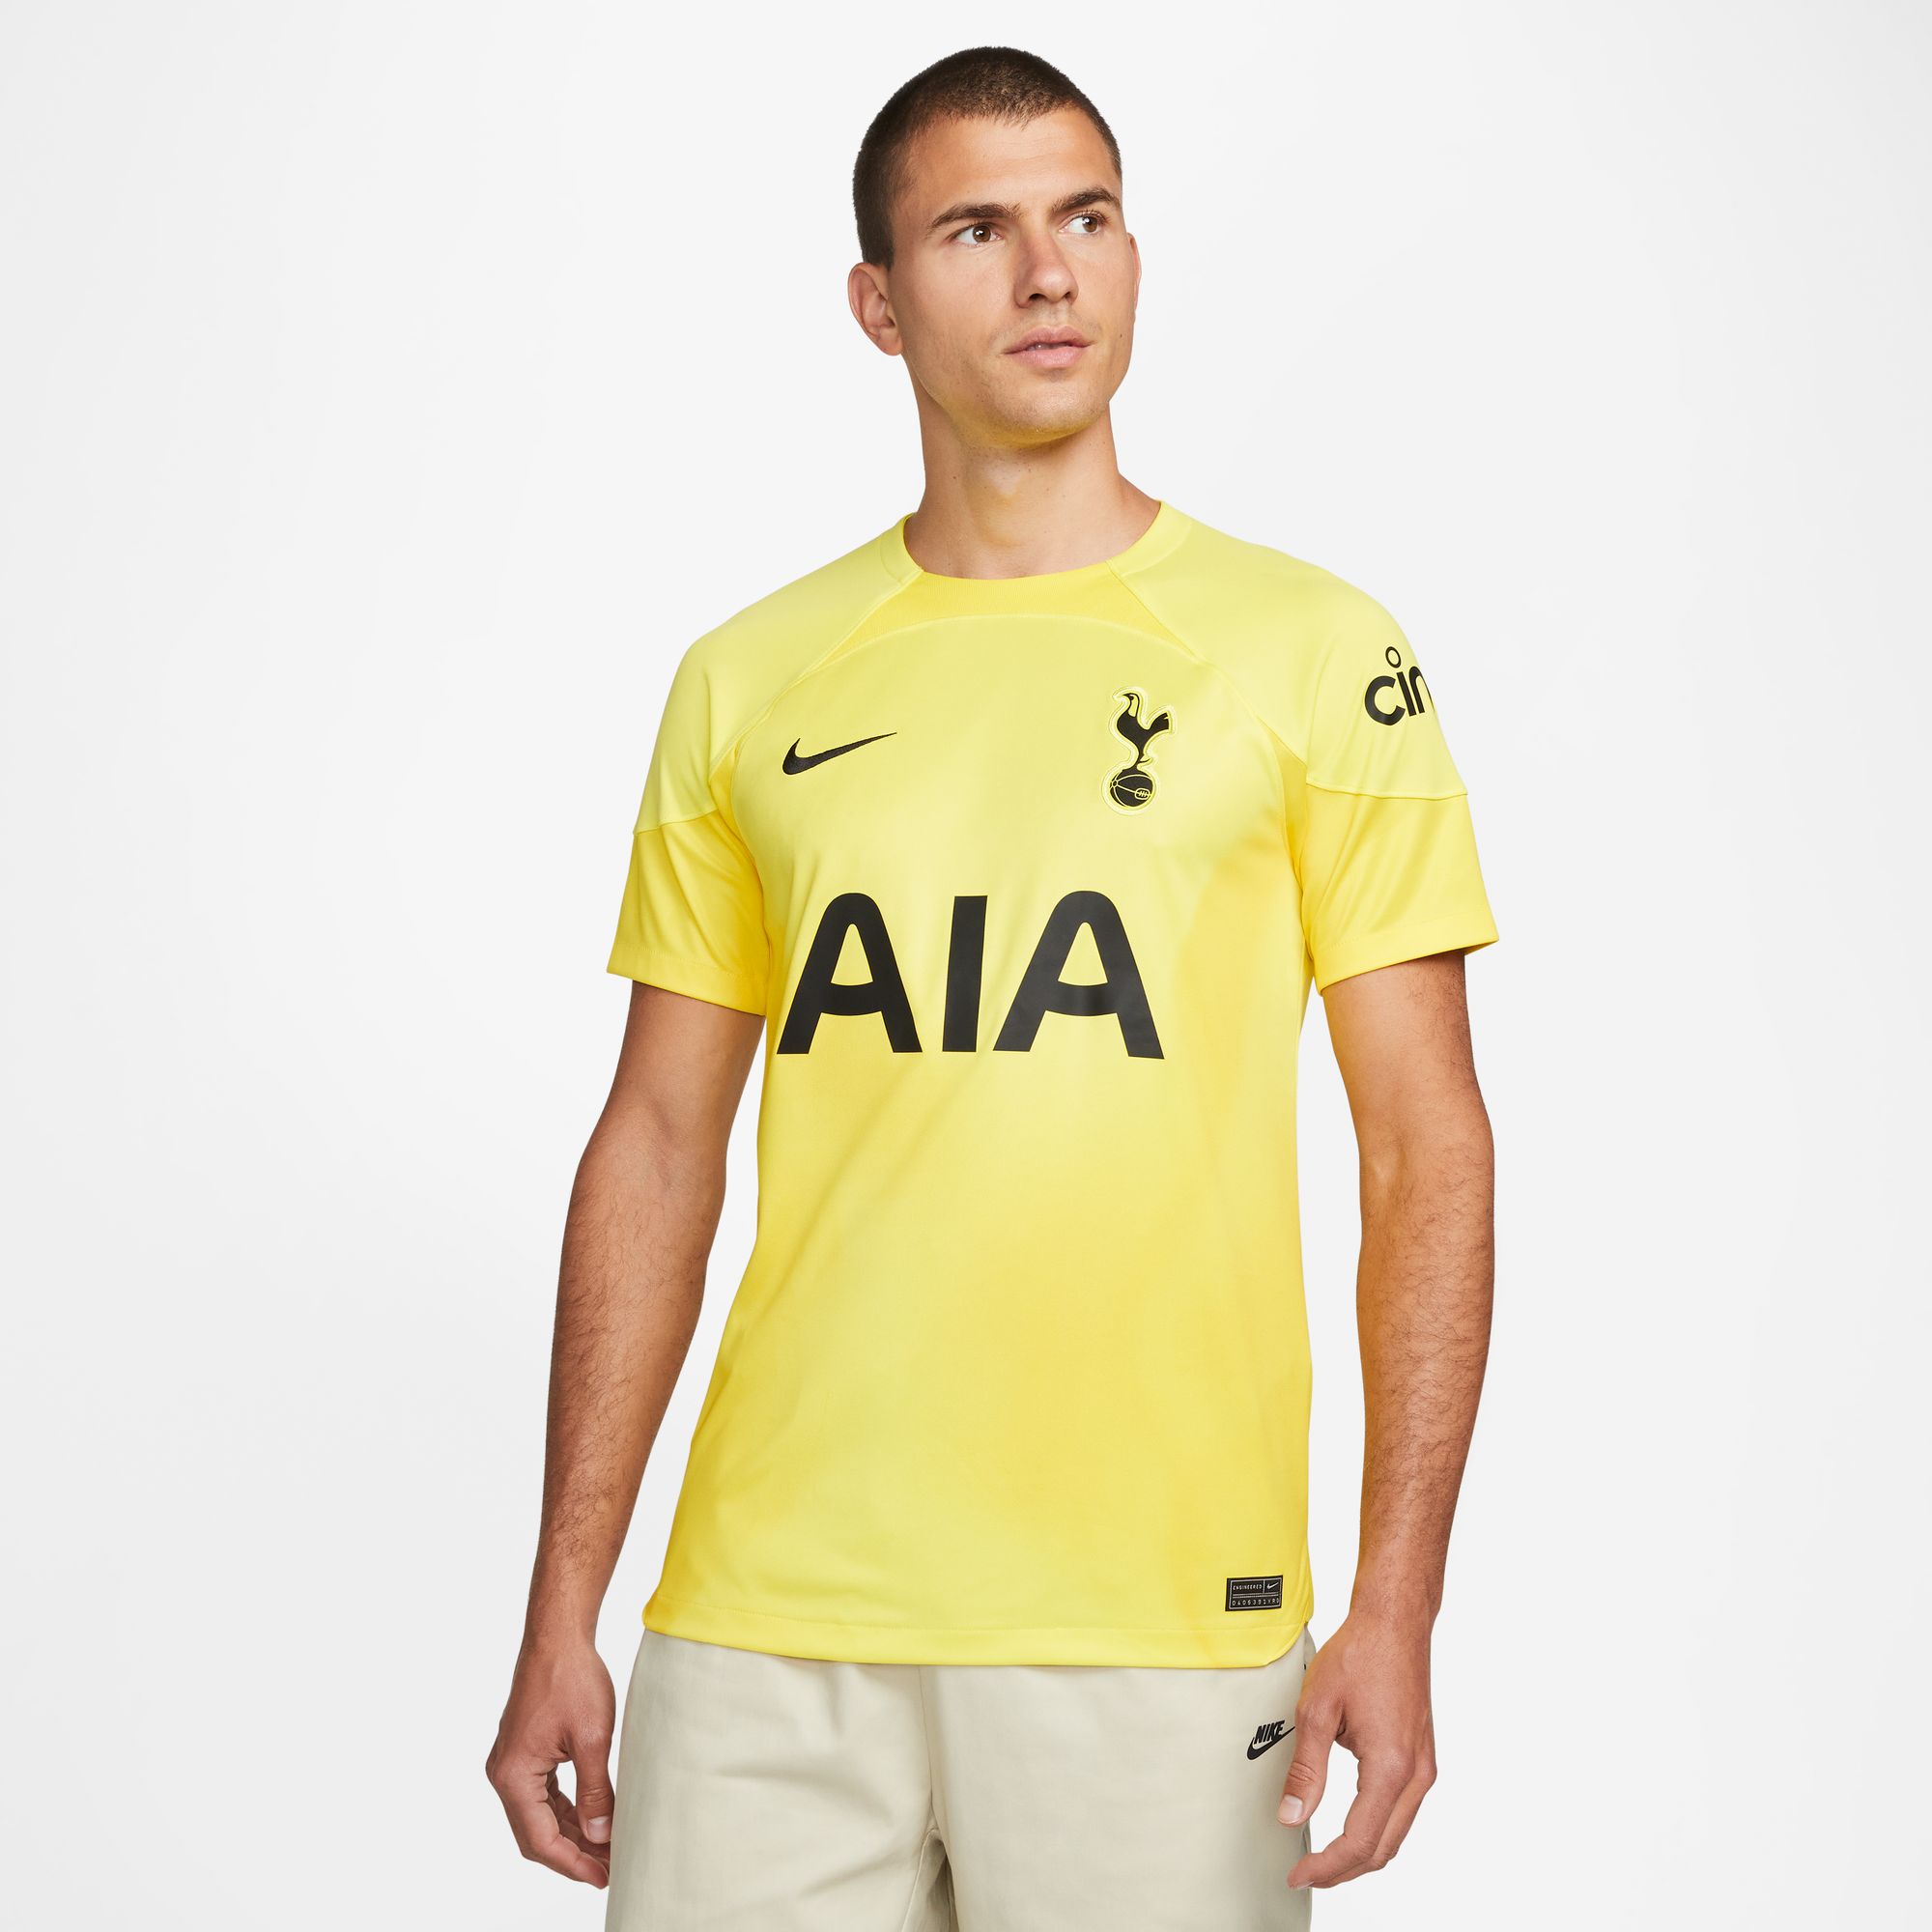 New Tottenham Home Shirt 22-23 Review - Do You Prefer to Last Season? : r/ Tottenham